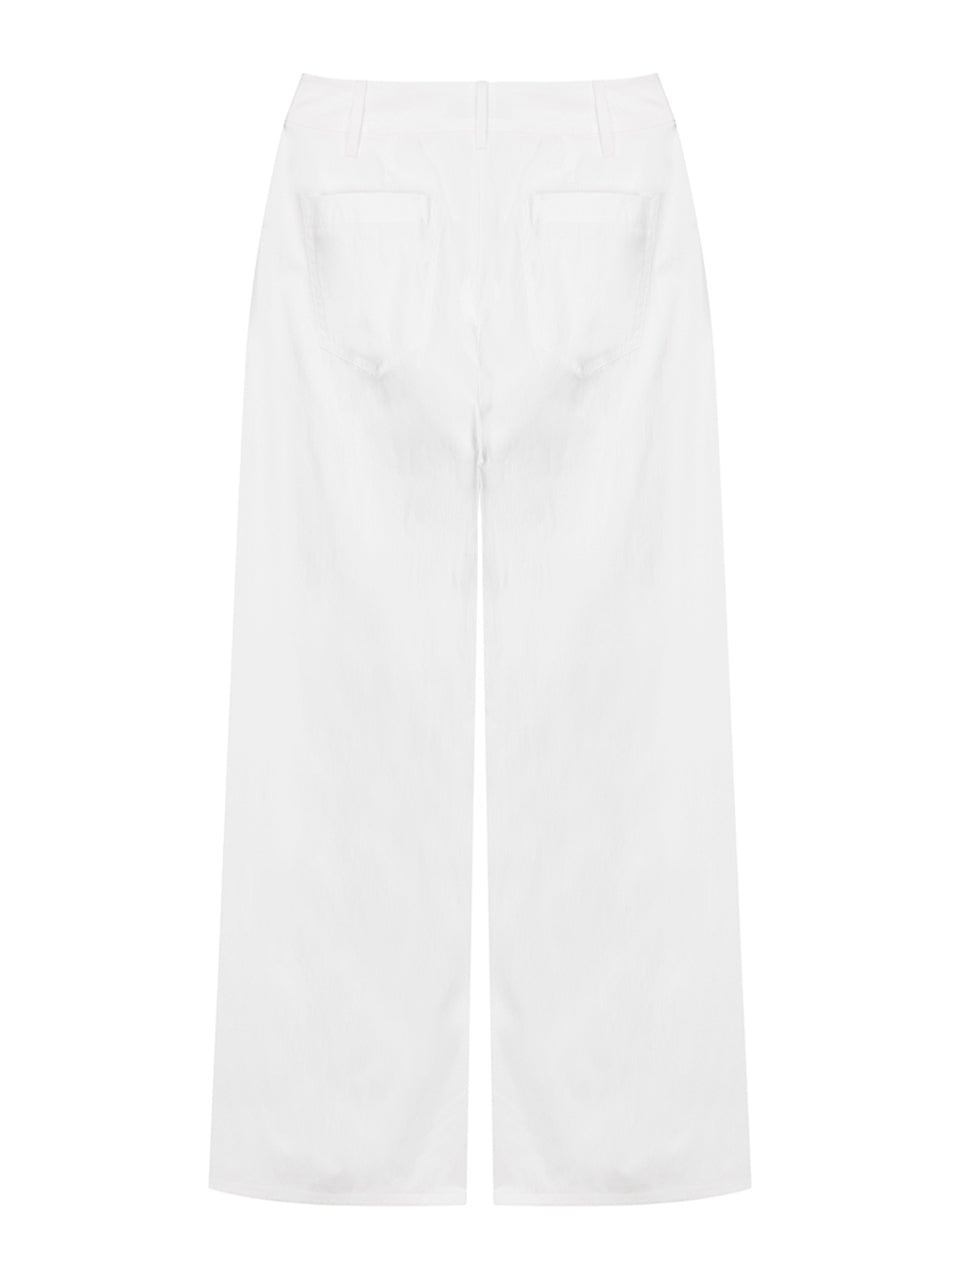 Big Pocket String Pants in White